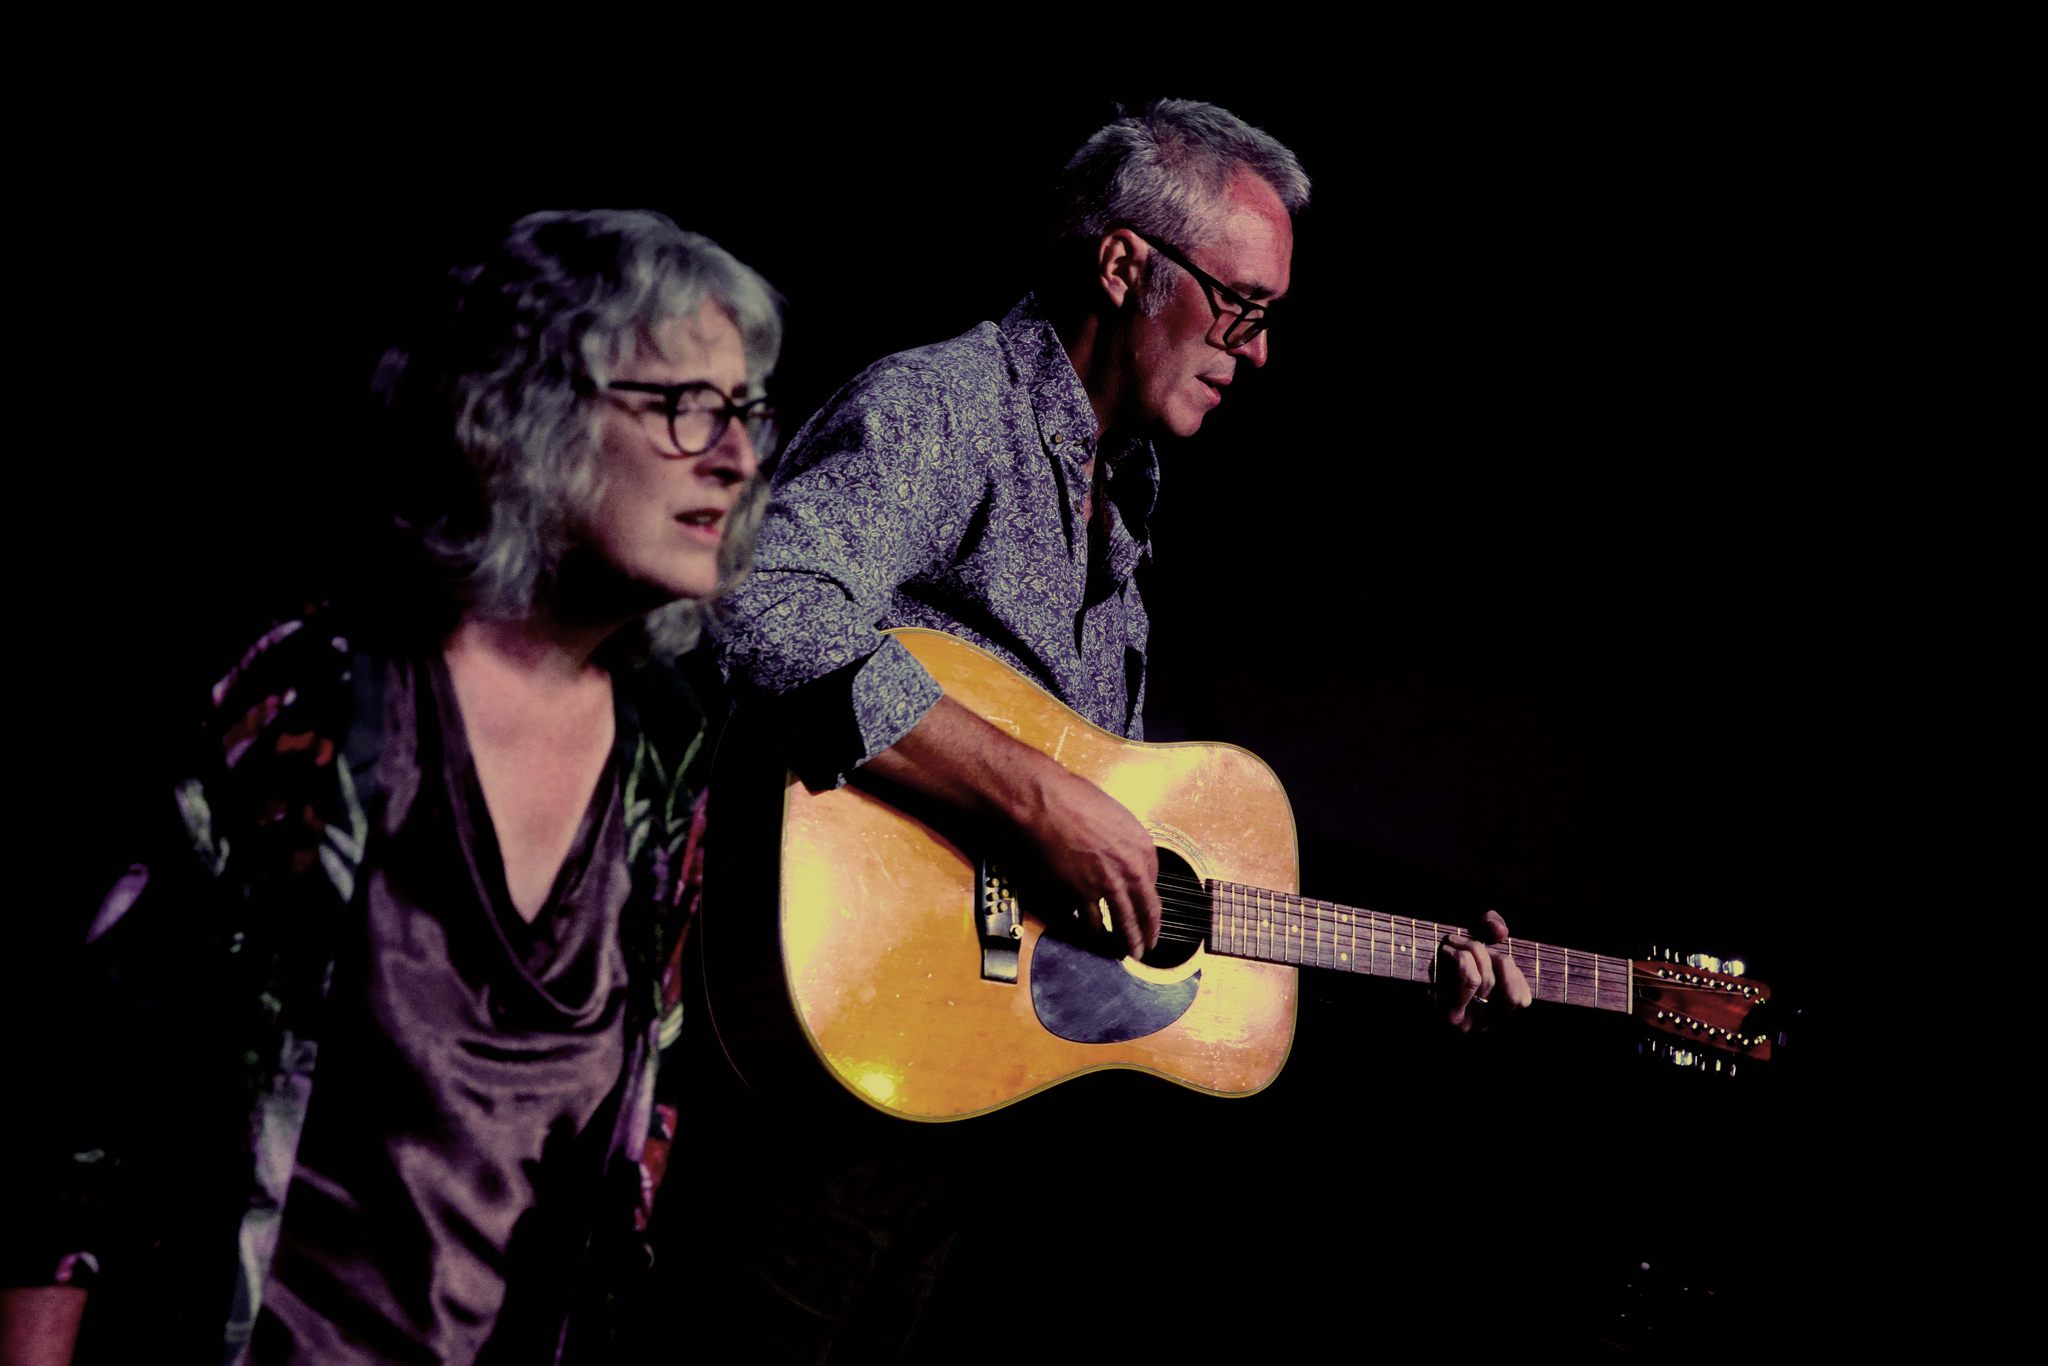 Man and woman singing, guitar